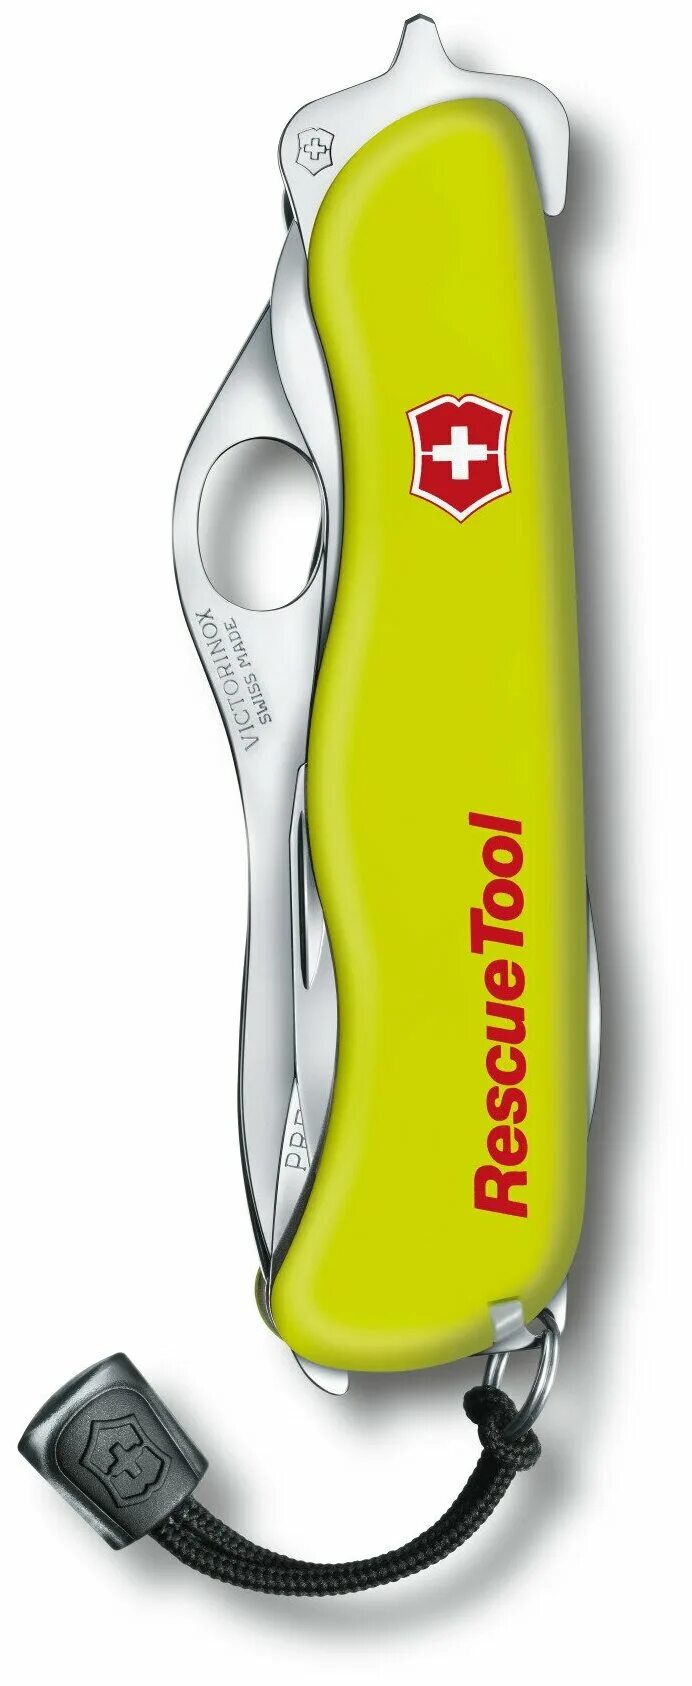 Rescue tool. Викторинокс Рескью. 0.8623.MWN нож перочинный Rescue Tool. Викторинокс спасатель. Нож Victorinox Rescue Tool one hand, 111 мм, 14 функций, желтый.